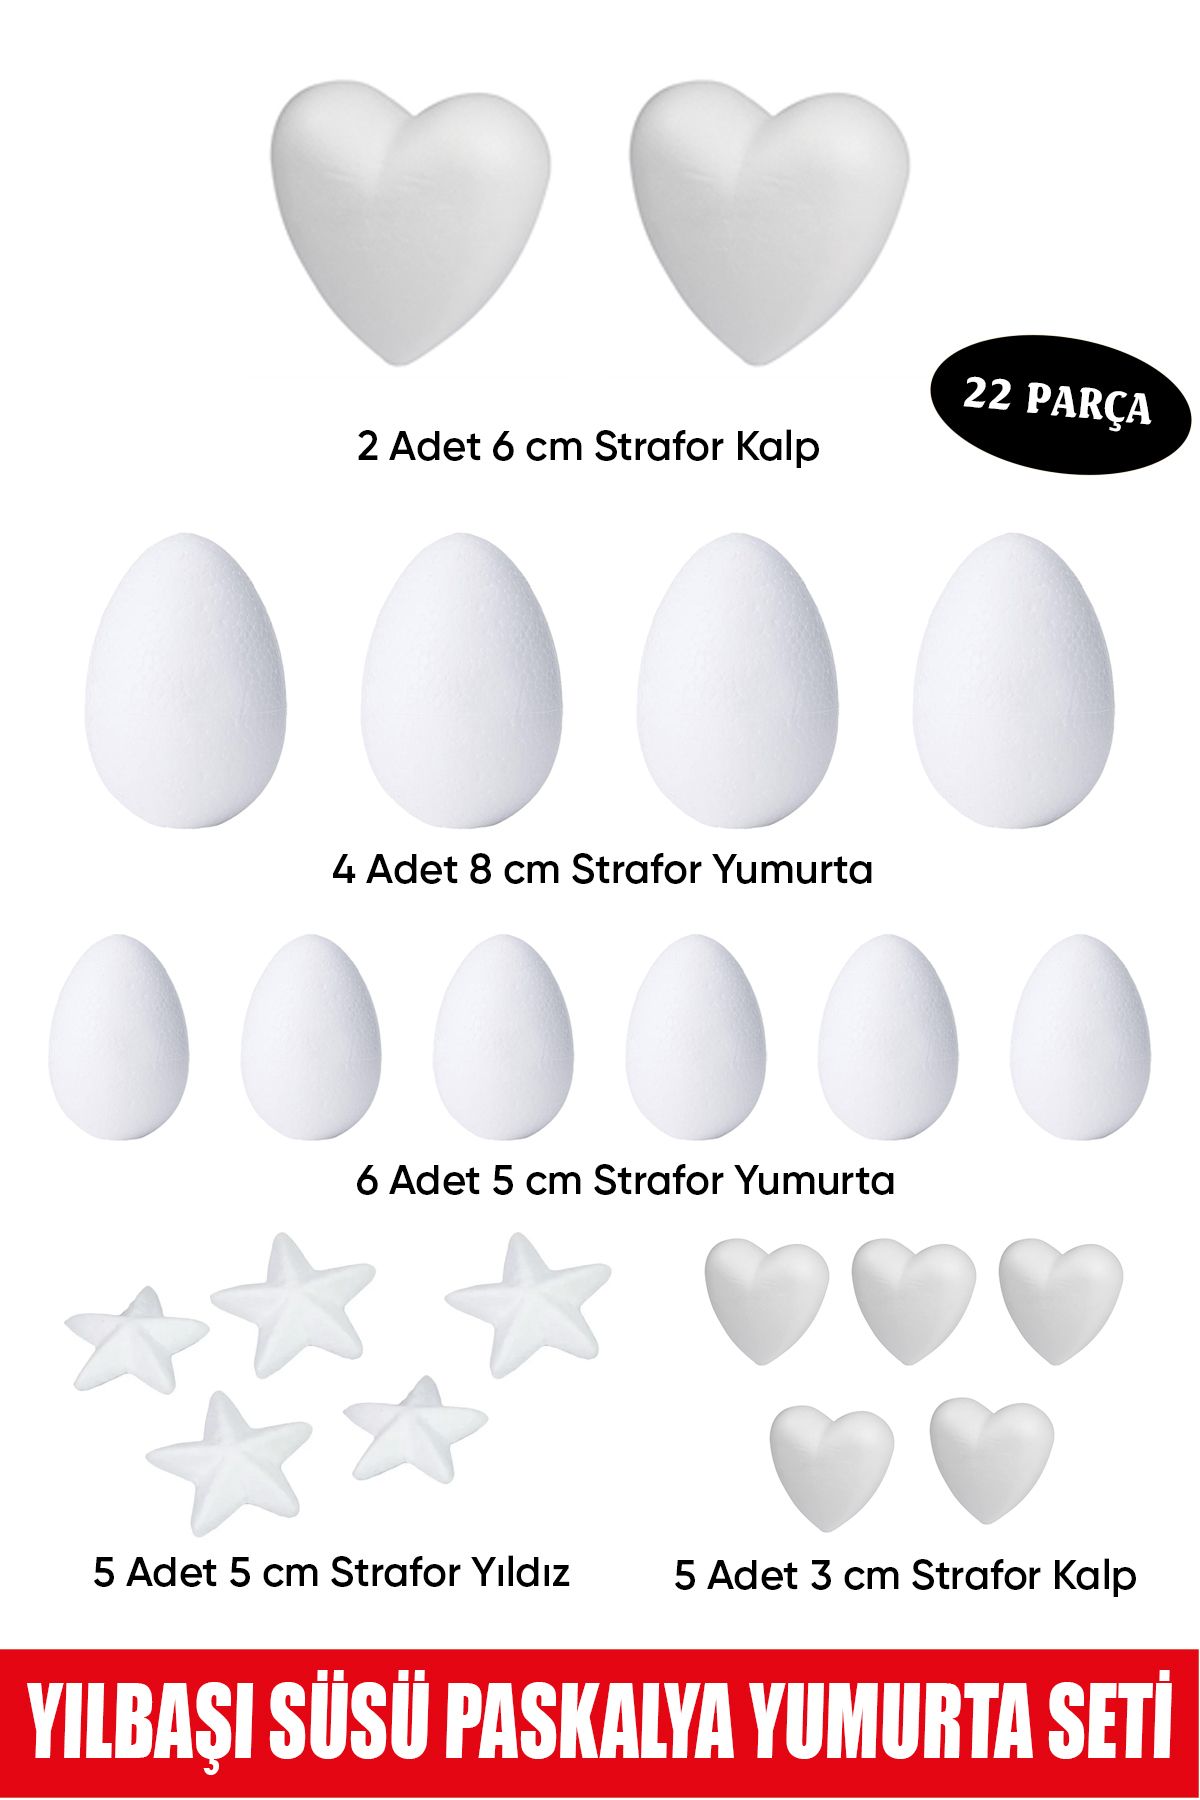 Vox Art Yılbaşı Süsü - Paskalya Yumurta Strafor Seti 22 Parça